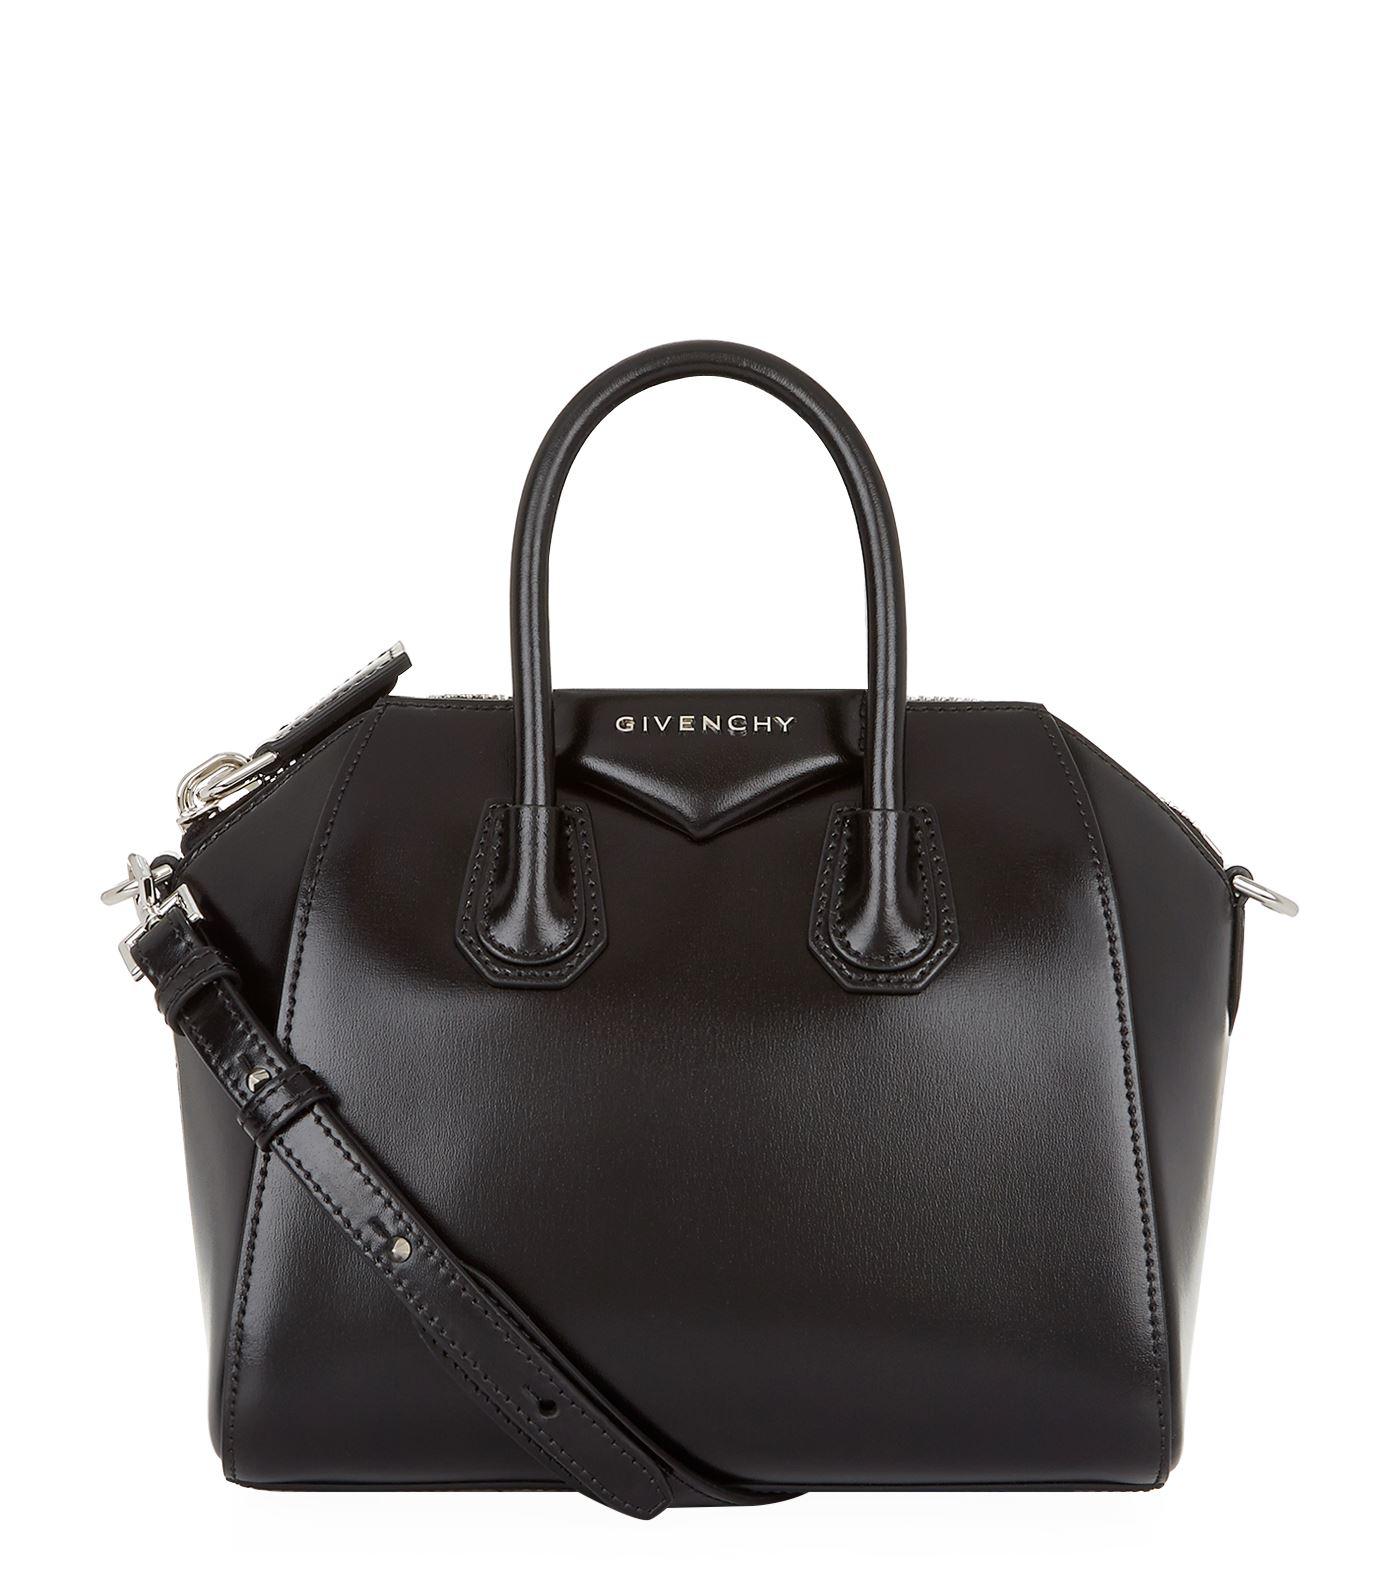 Lyst - Givenchy Mini Smooth Antigona Tote in Black - Save 1.9713261648745544%